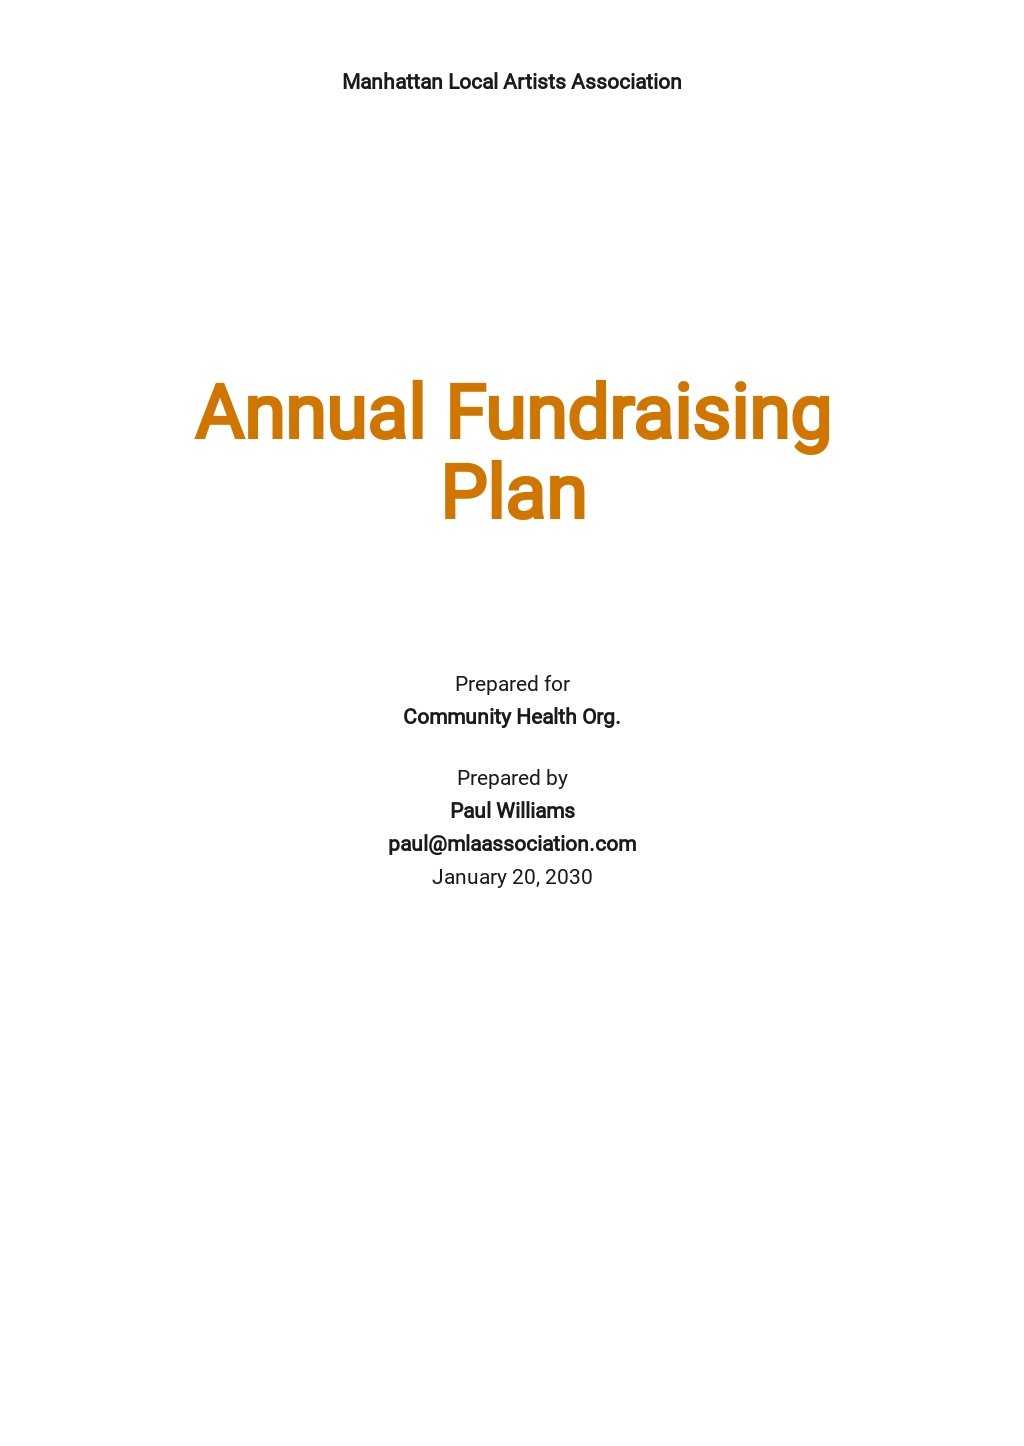 Annual Fundraising Plan Template.jpe